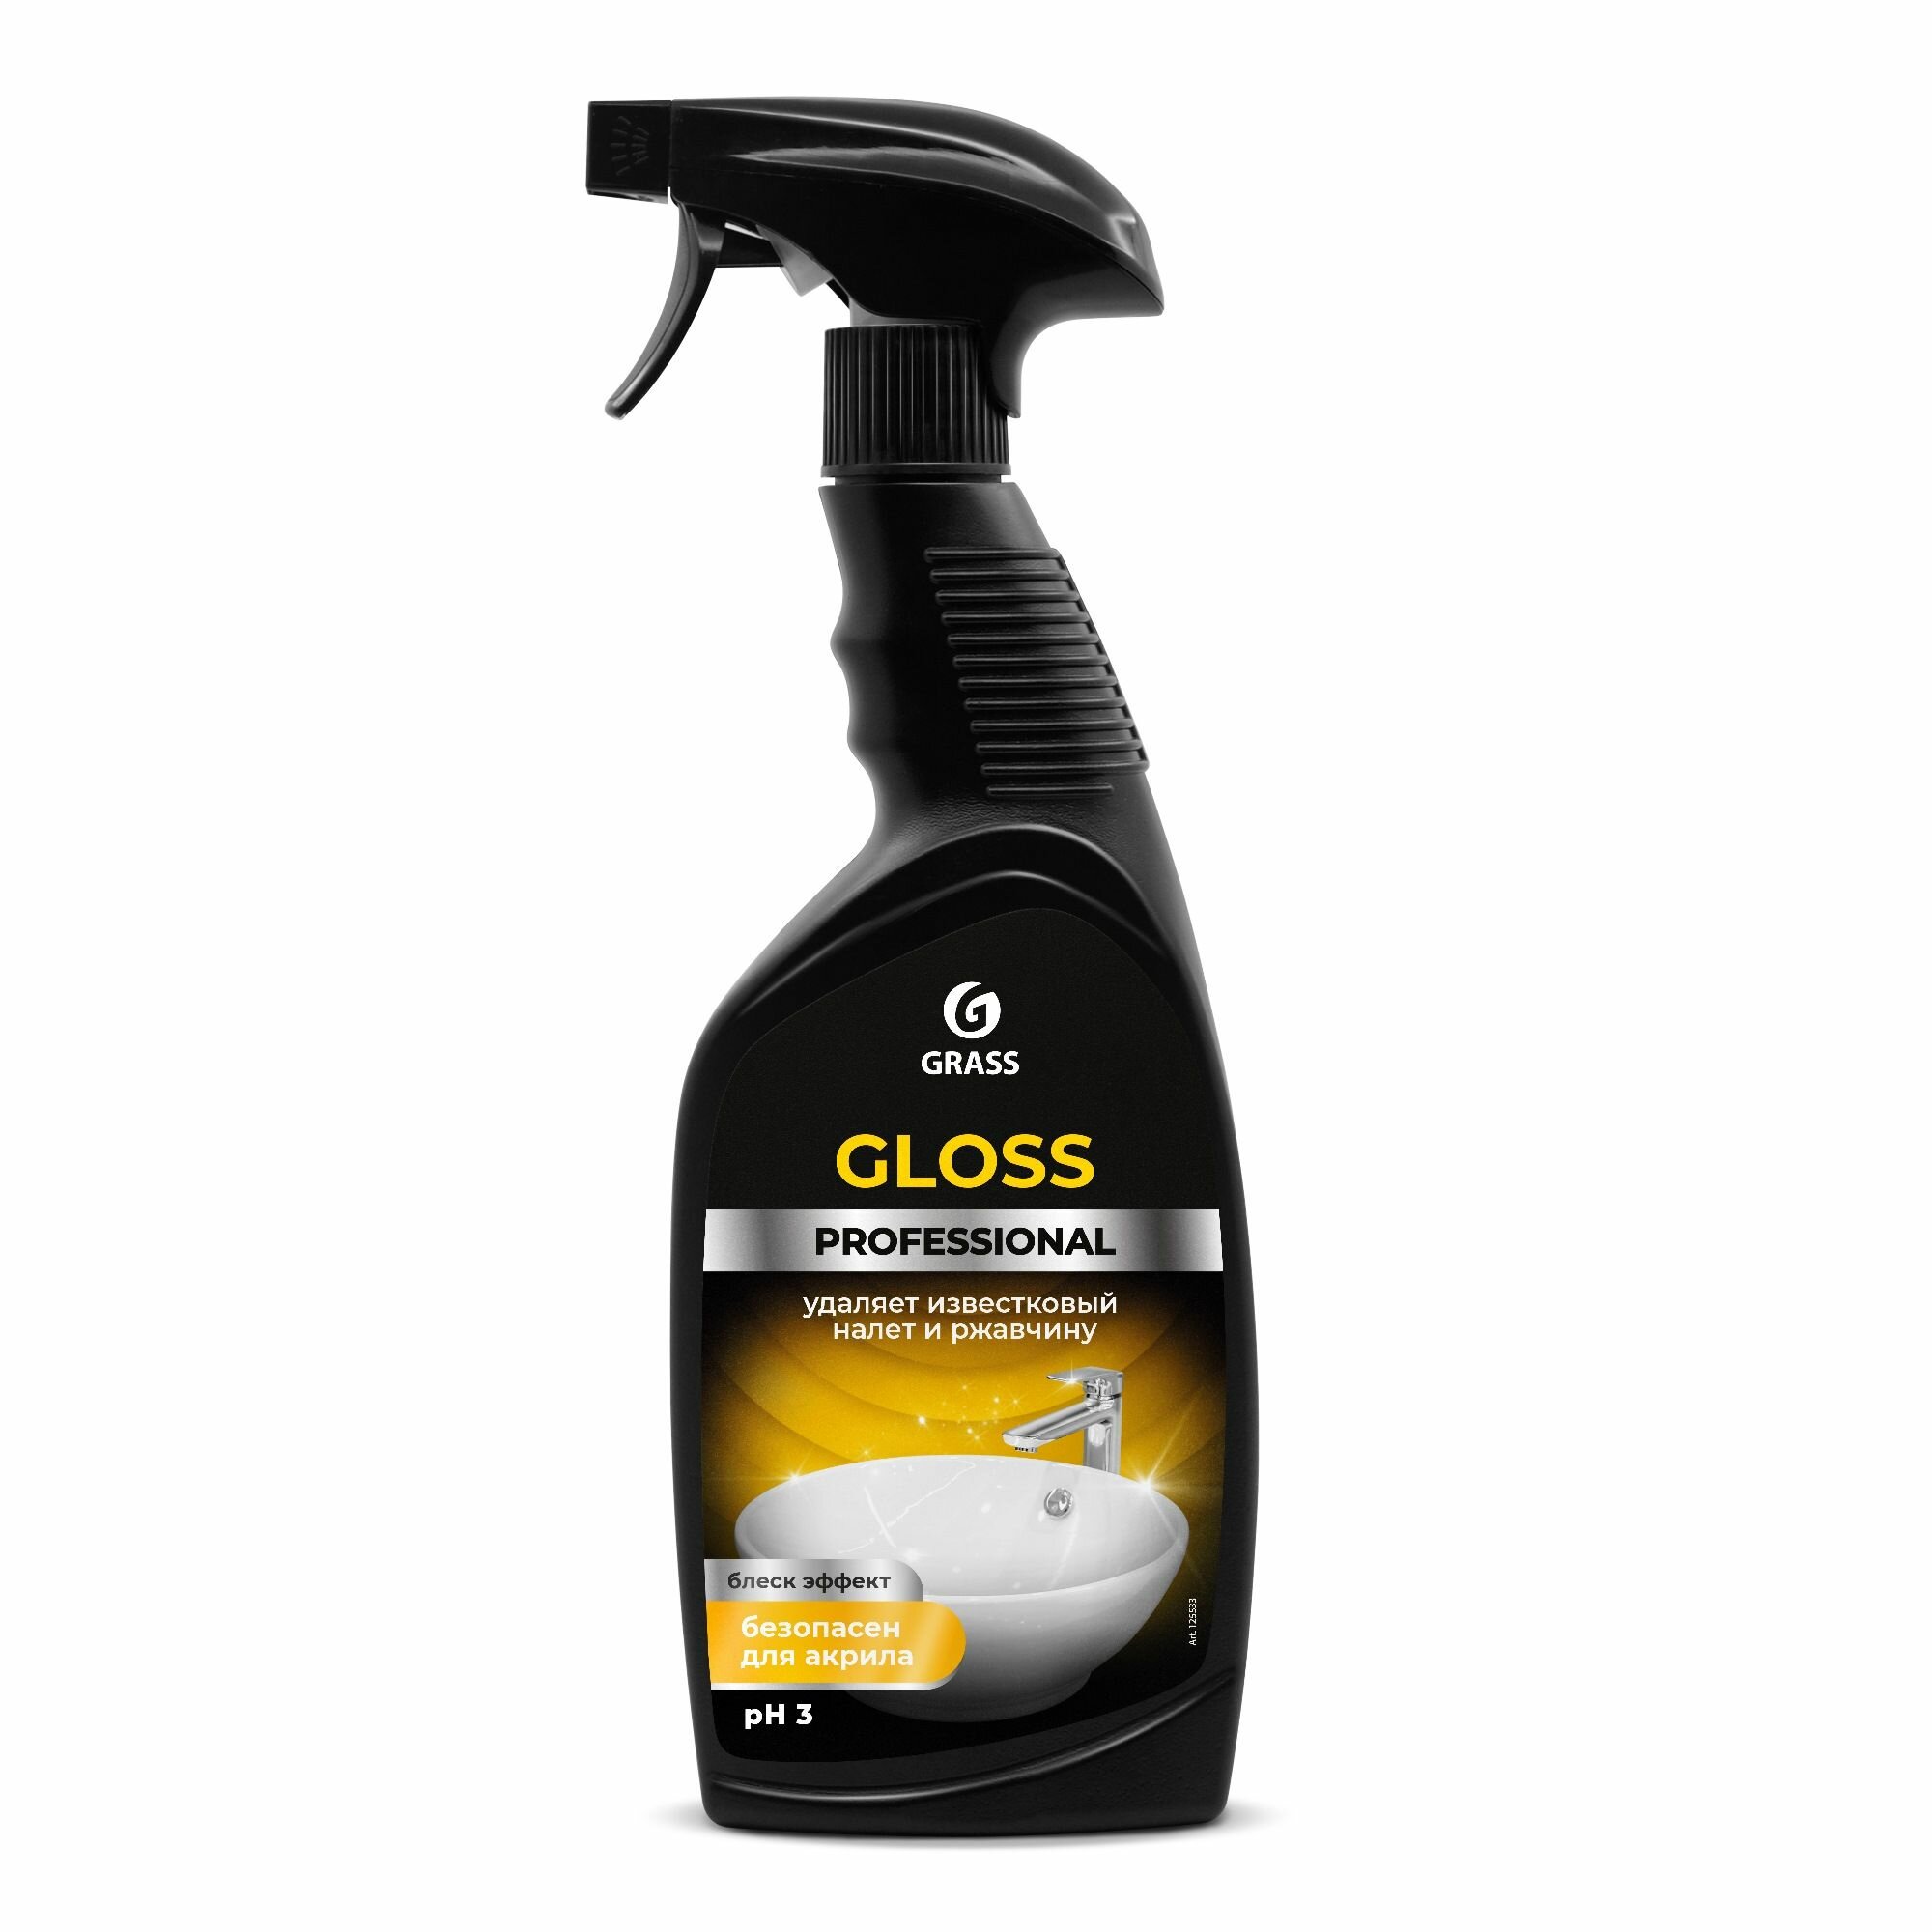 Grass Чистящее средство Gloss Professional, 600 мл